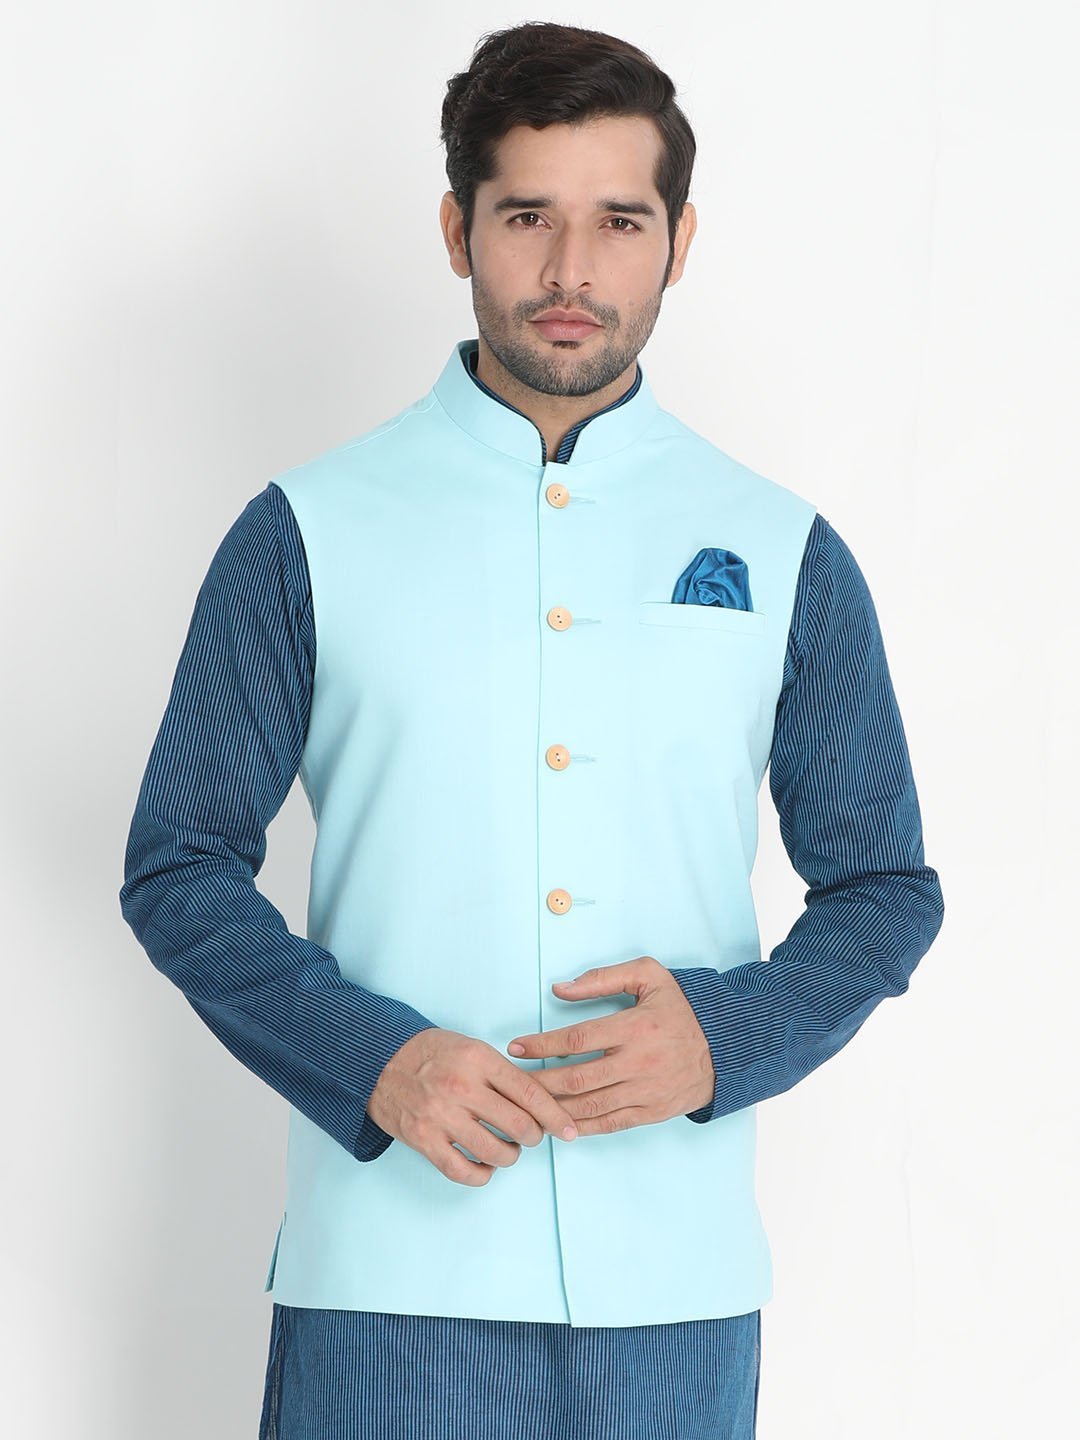 Men's Light Blue Cotton Ethnic Jacket